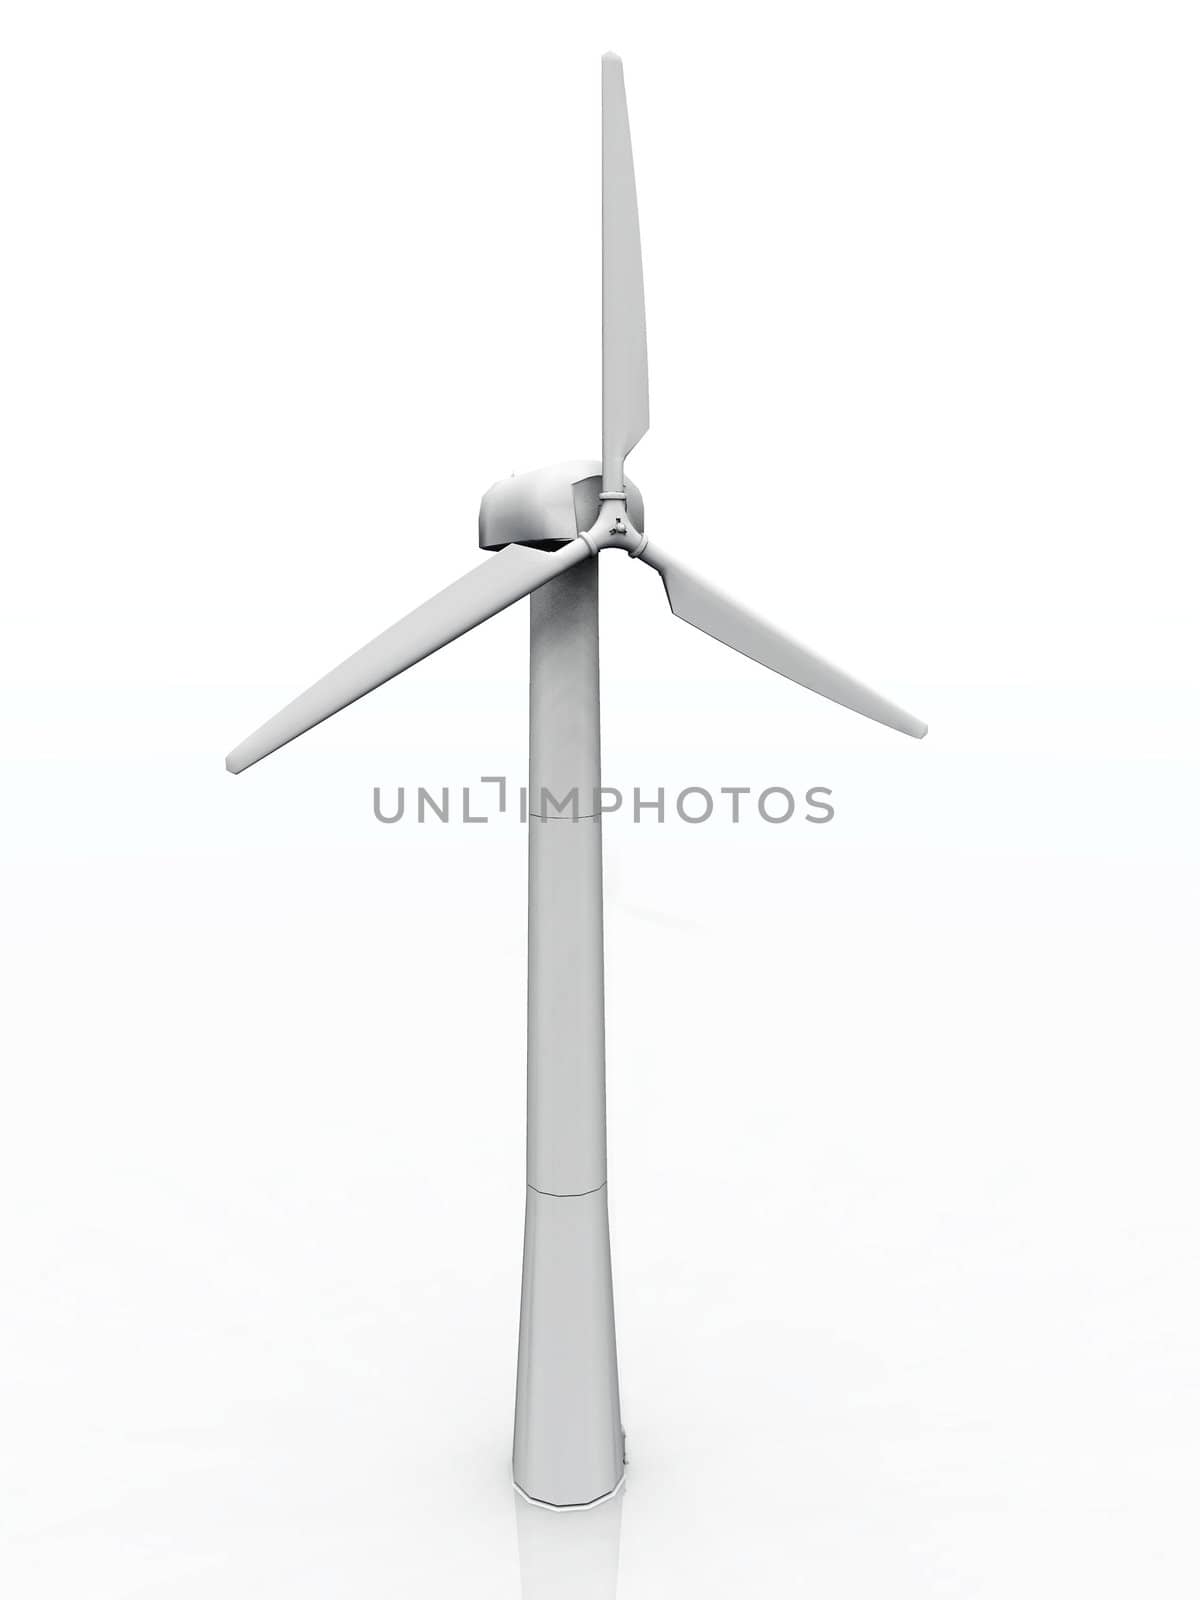 a wind turbine on a white background